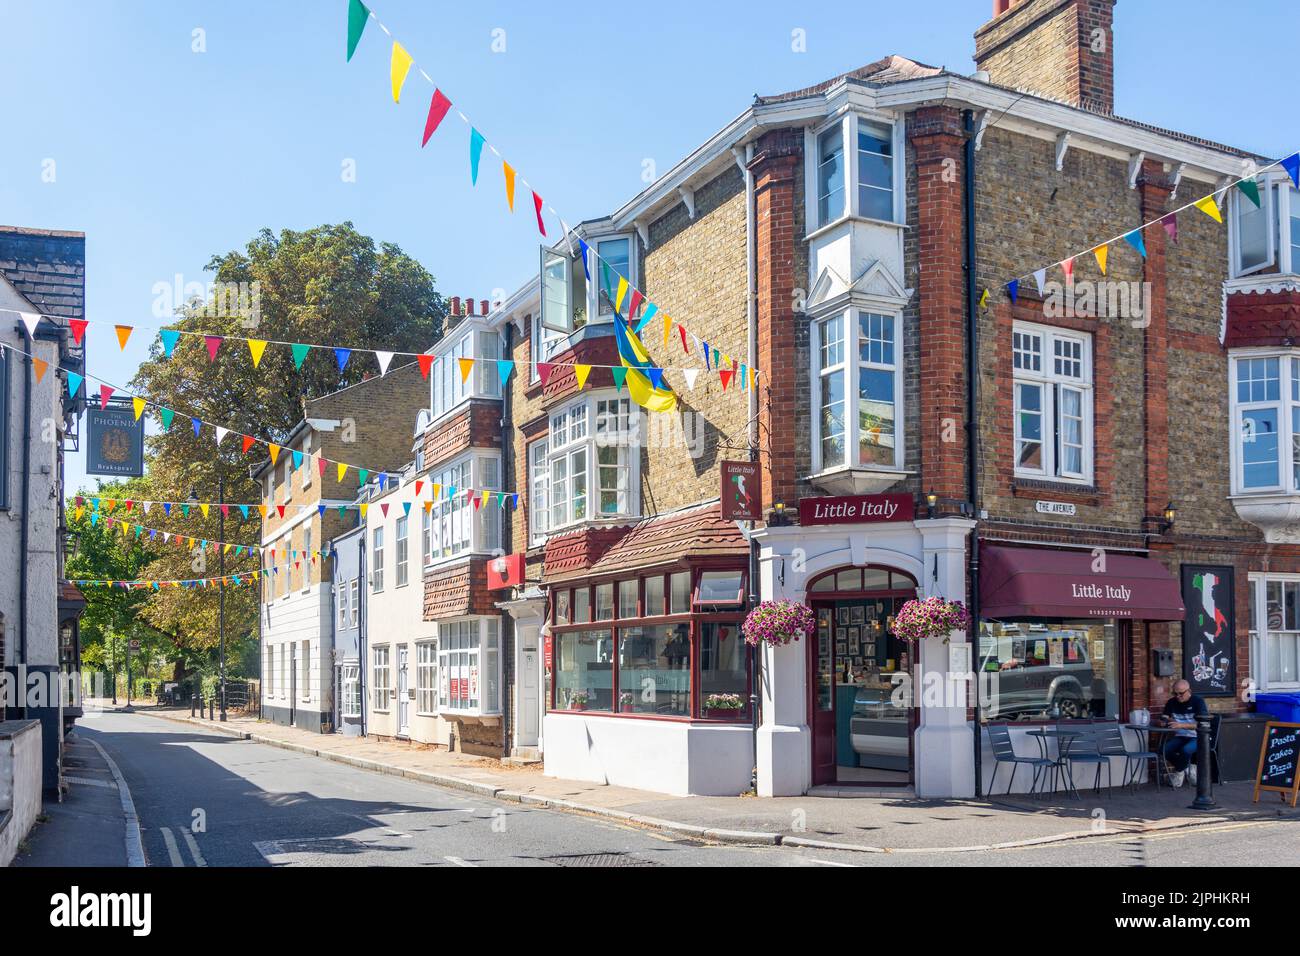 Little Italy Cafe & Deli, Thames Street, Sunbury-on-Thames, Surrey, England, United Kingdom Stock Photo